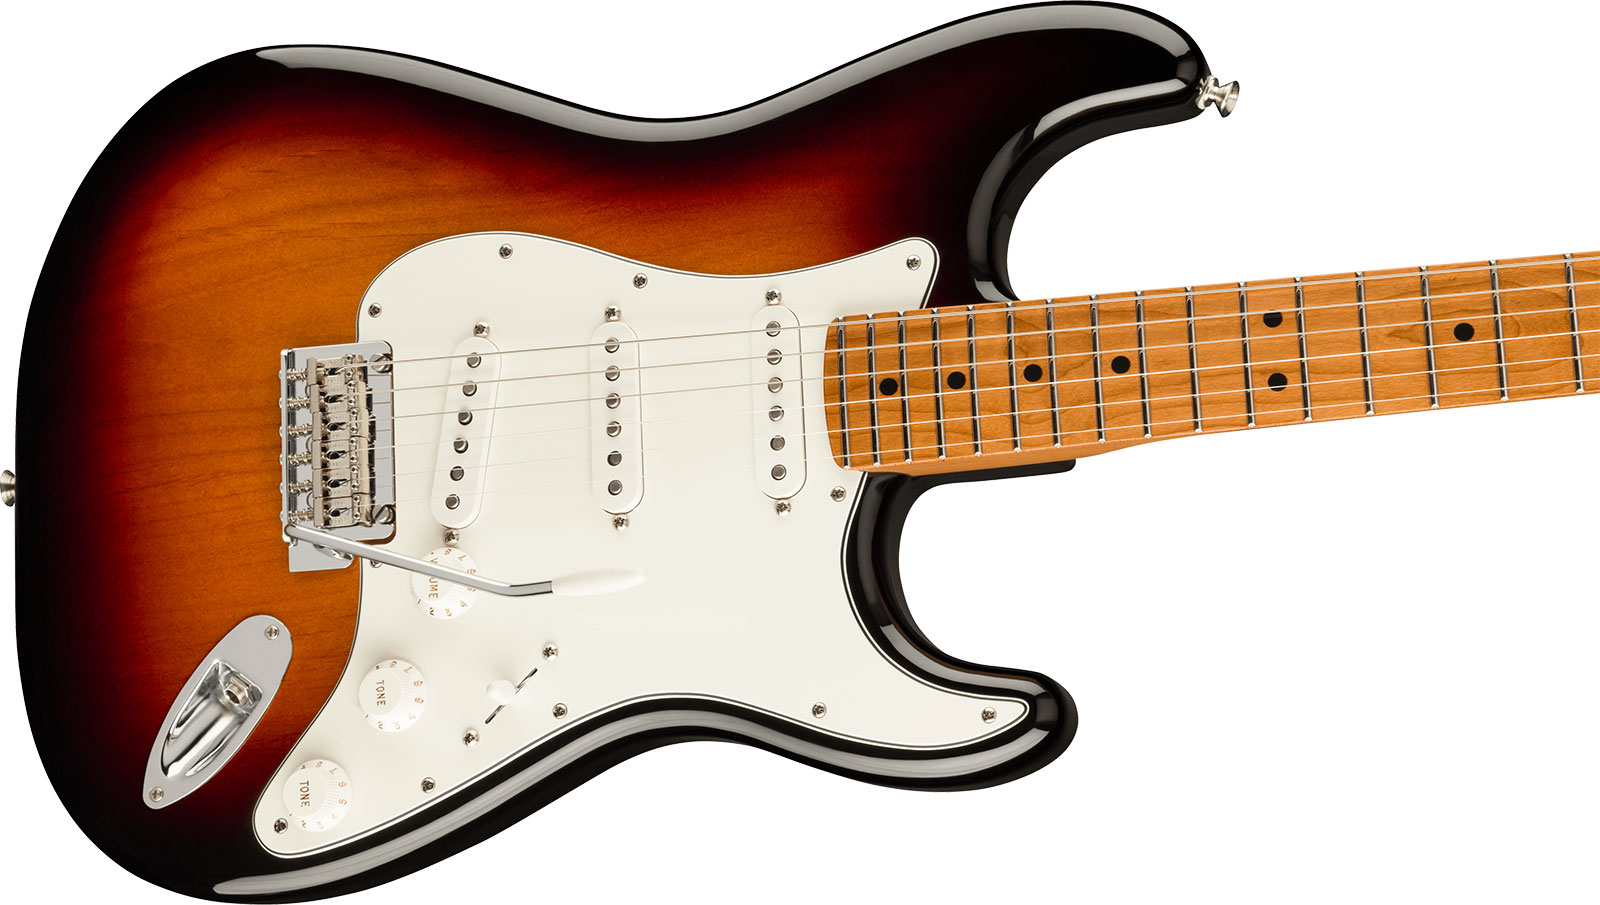 Fender Strat Player Roasted Maple Neck Ltd Mex 3s Trem Mn - 3 Color Sunburst - Elektrische gitaar in Str-vorm - Variation 2